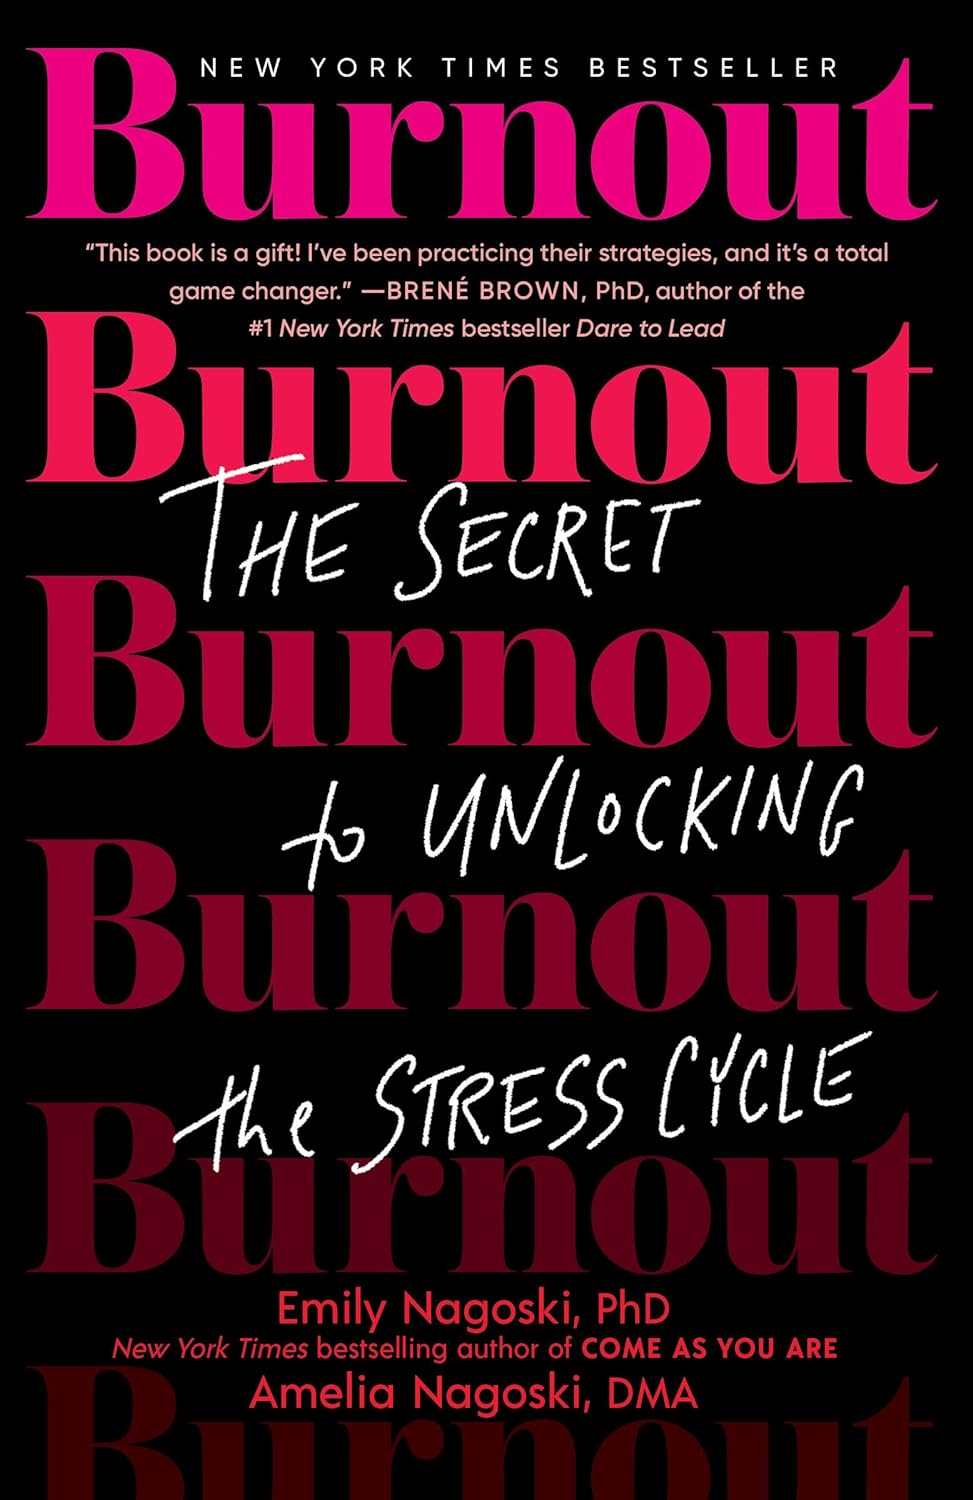 Burnout: The Secret to Unlocking the Stress Cycle, by Emily Nagoski, Ph.D. and Amelia Nagoski, DMA.